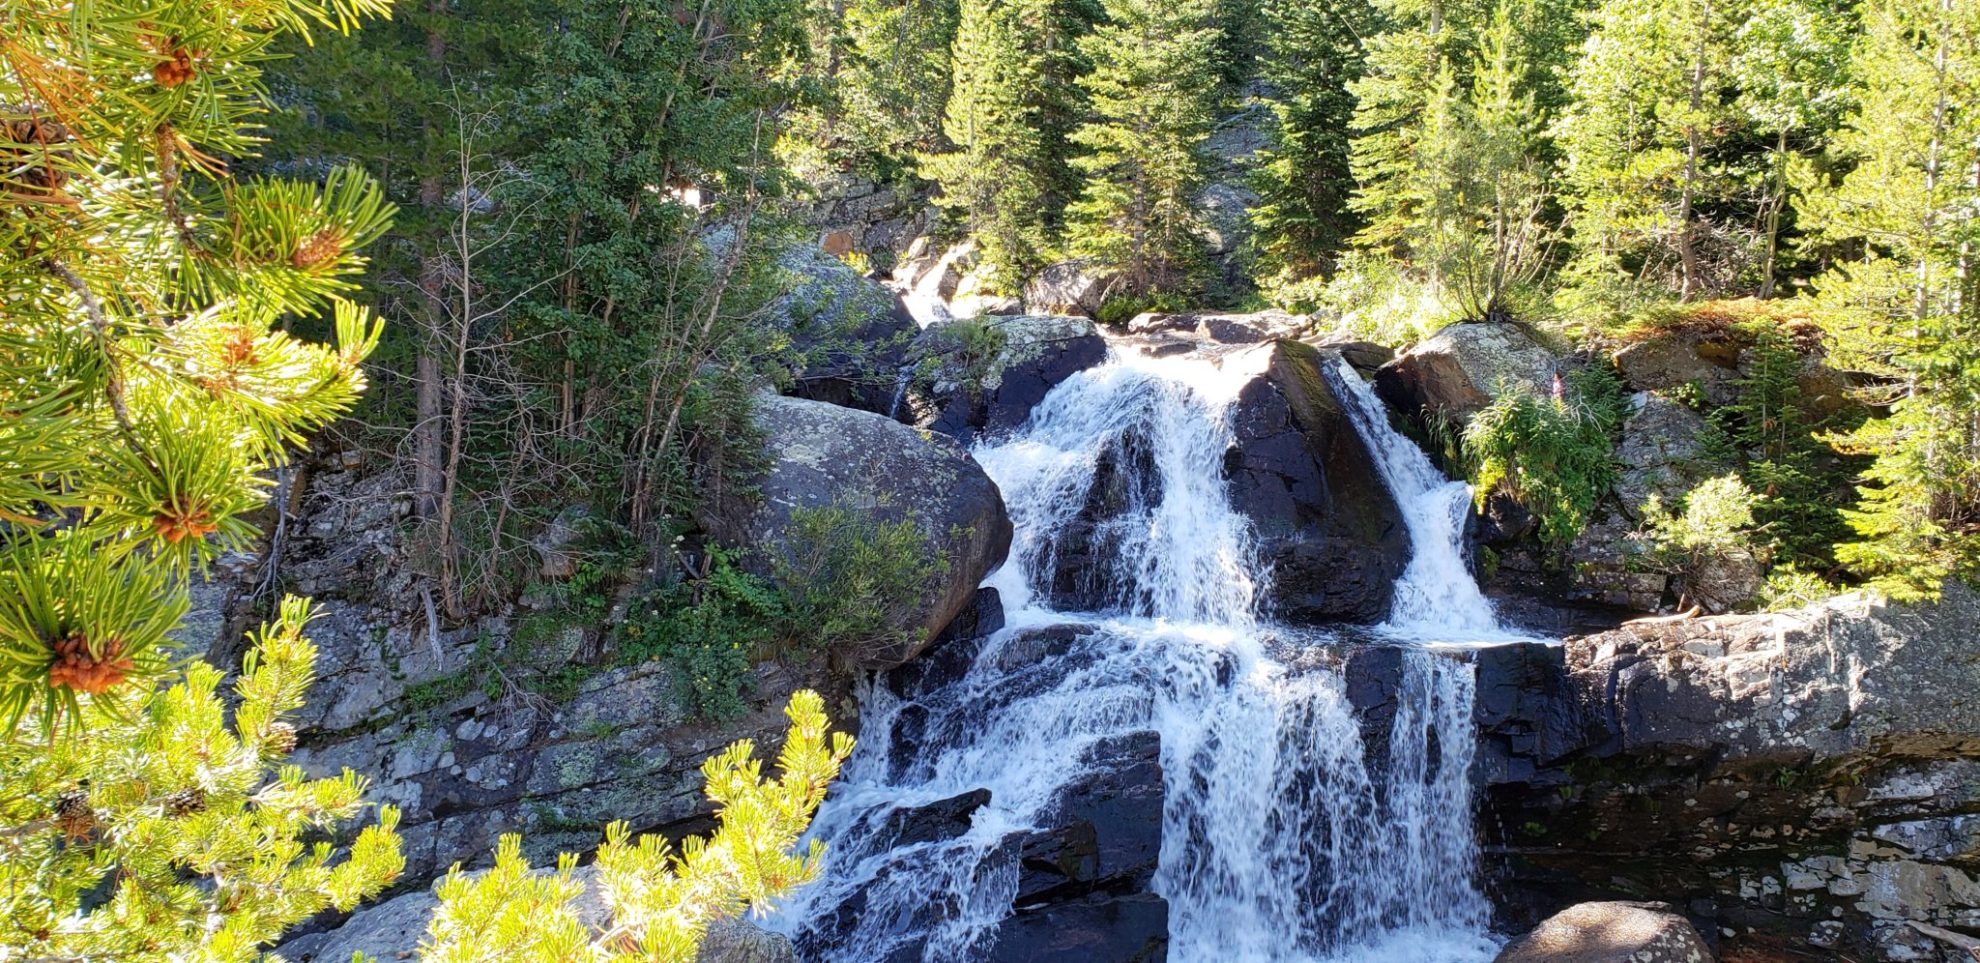 So many beautiful waterfalls along the trail